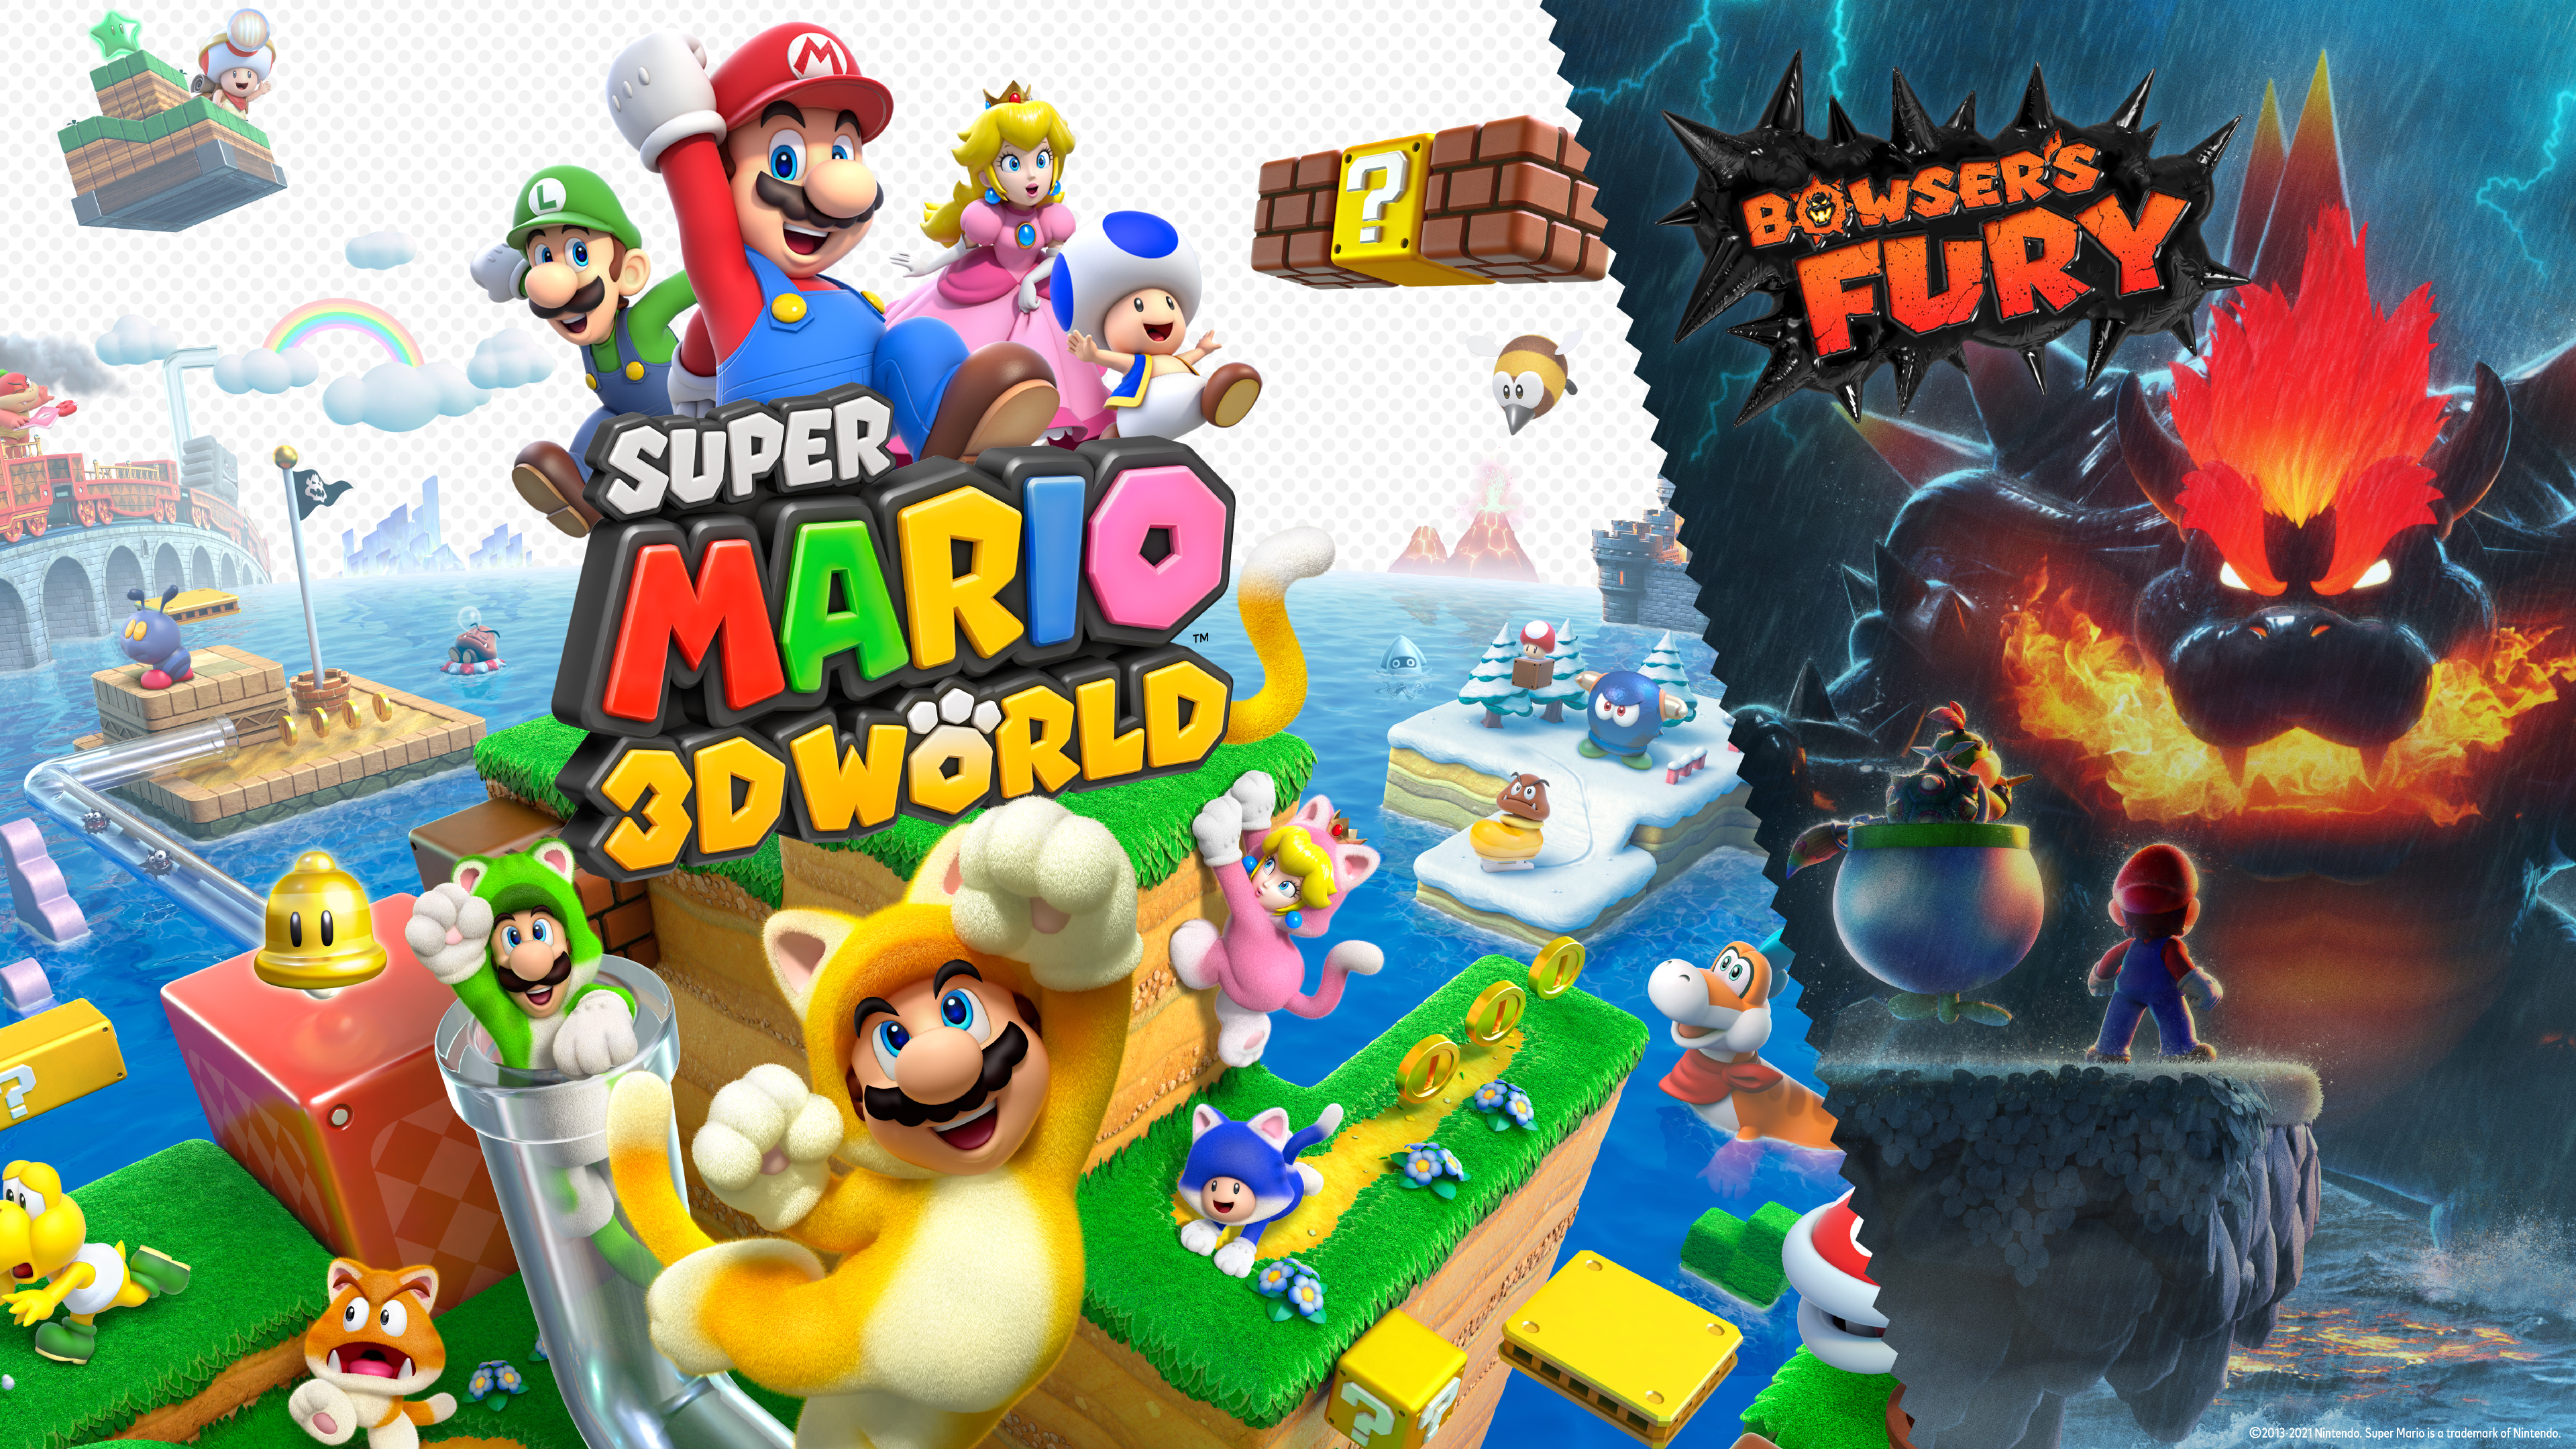 Video Game Super Mario 3D World + Bowser’s Fury 4k Ultra HD Wallpaper